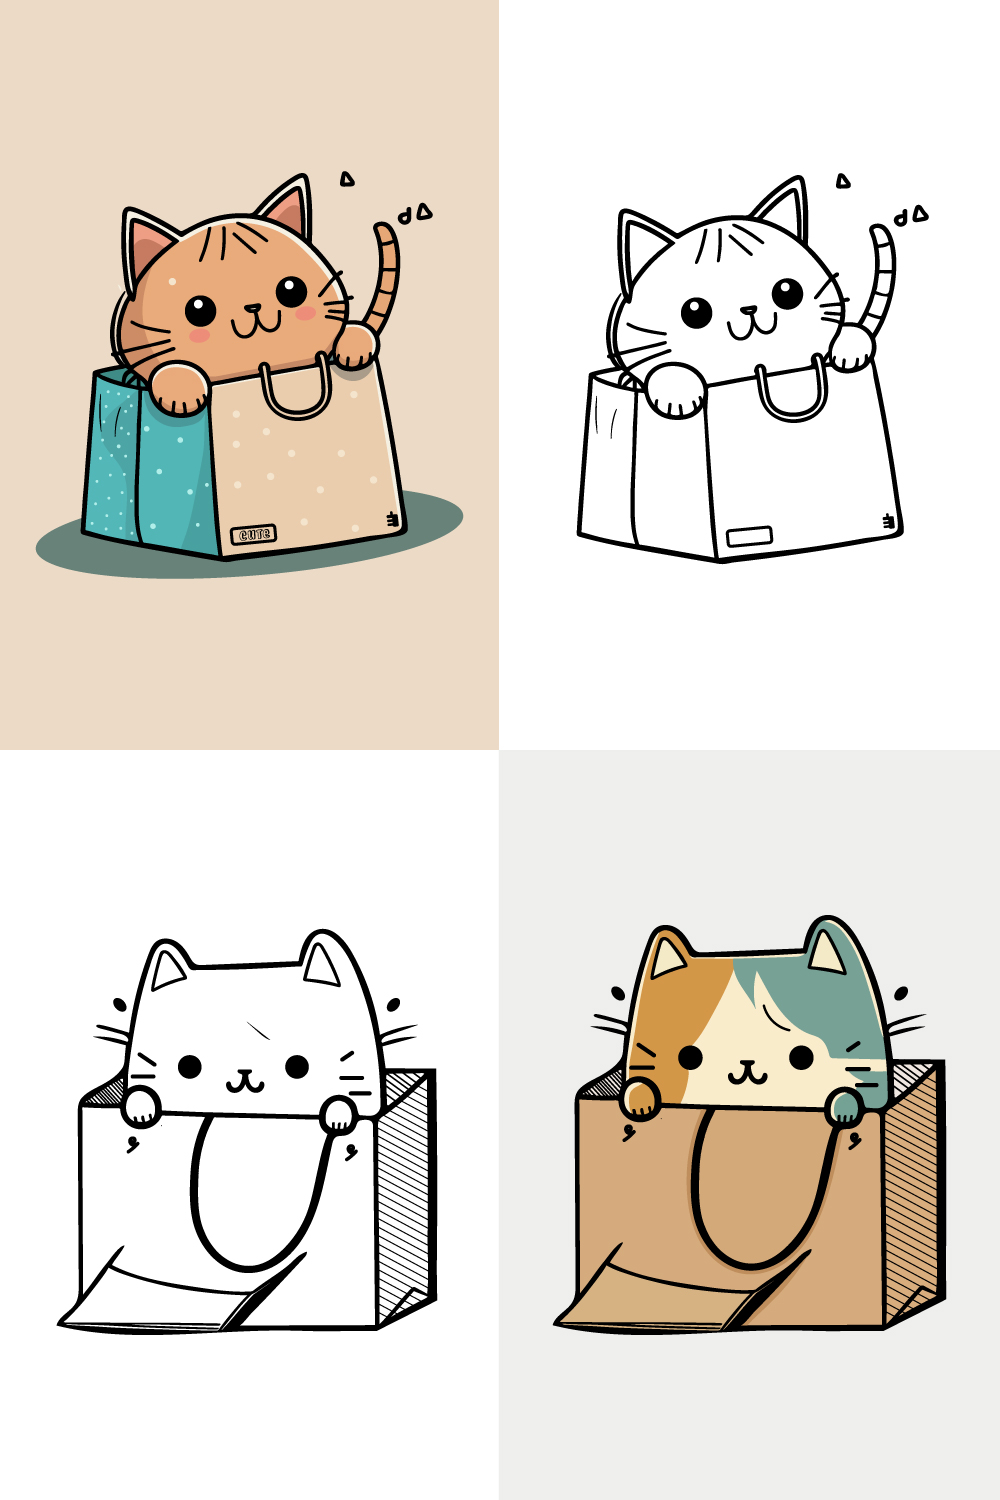 character of a Little cat in a paper shopping bag, Cute cat, Cat cartoon, drawing, Cat mascot, cute cat bundle design pinterest preview image.